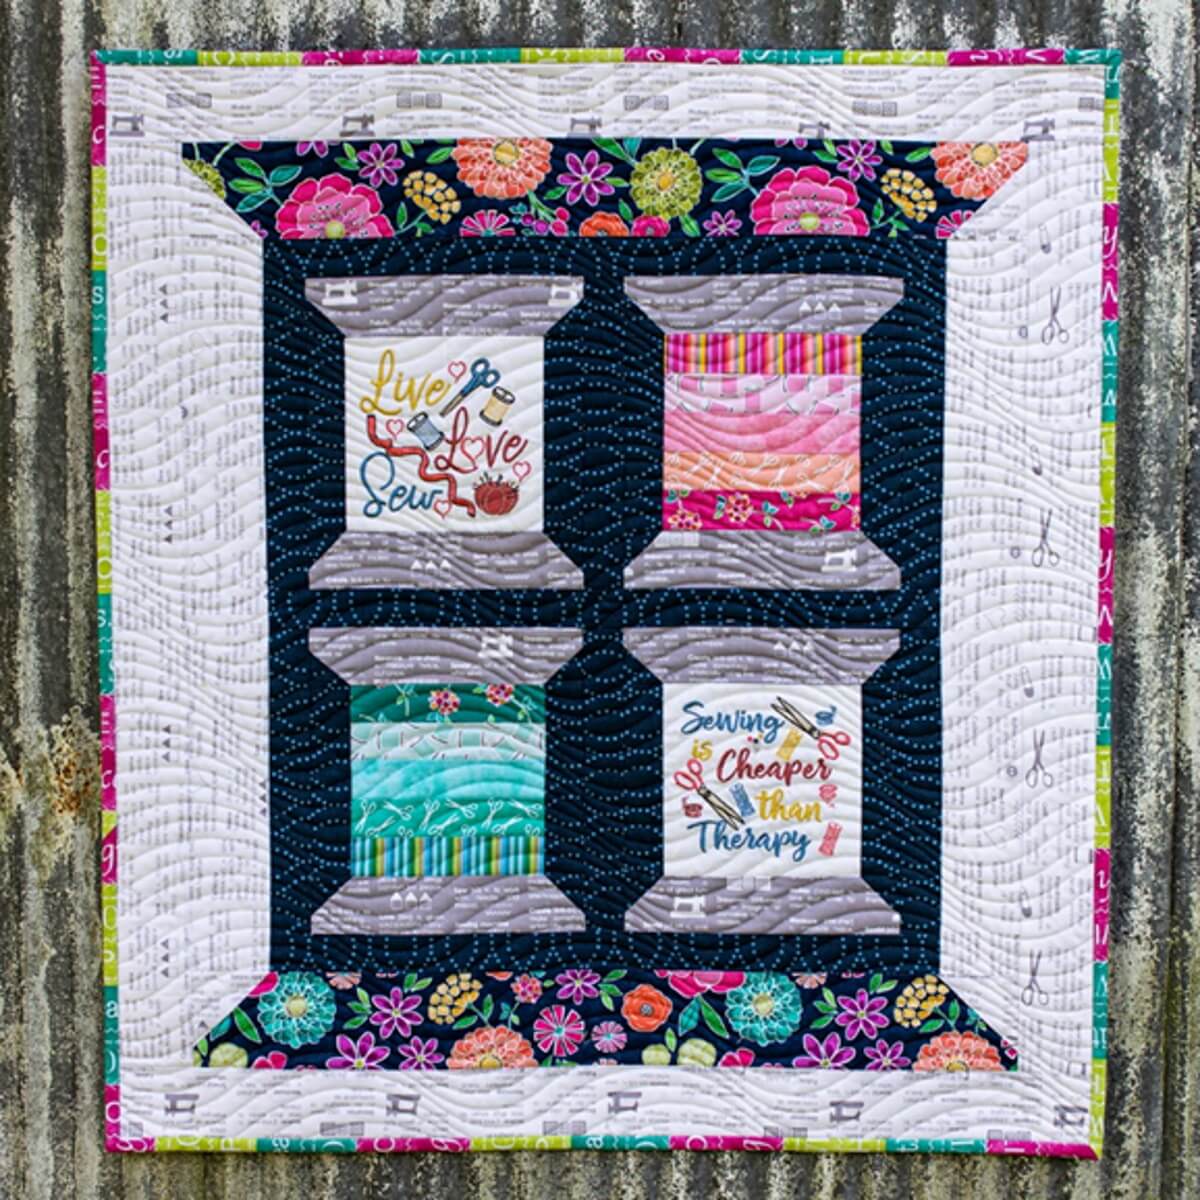 Love to Sew Mini Quilt